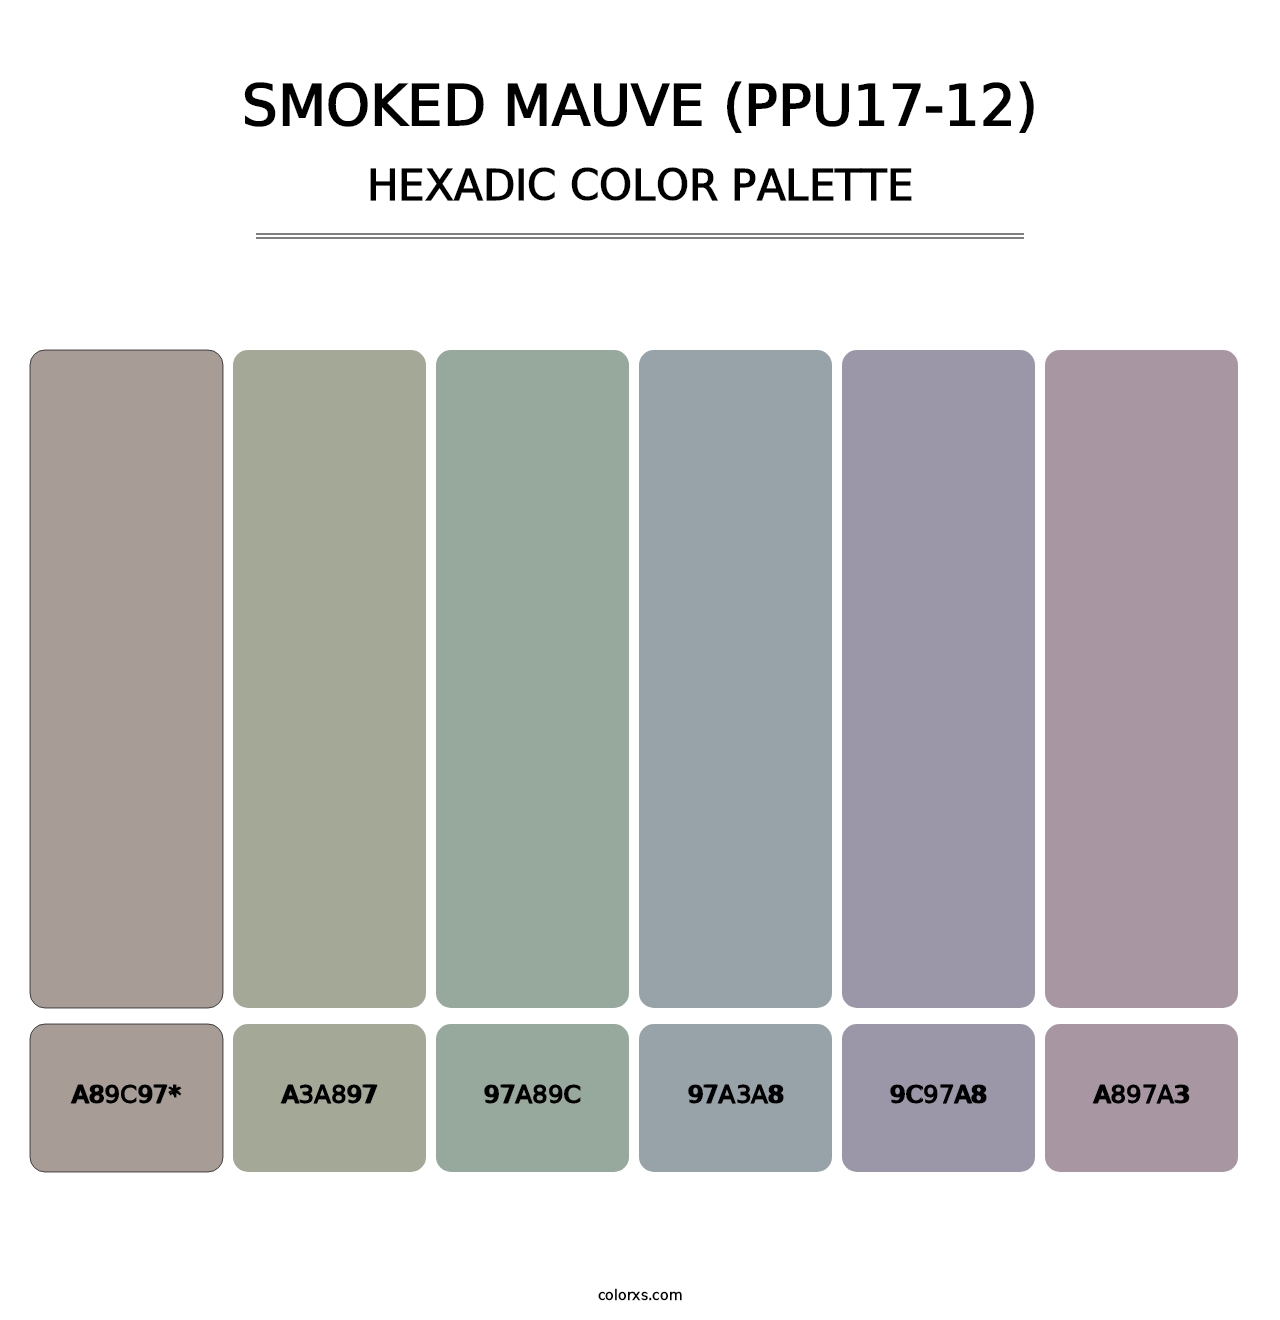 Smoked Mauve (PPU17-12) - Hexadic Color Palette